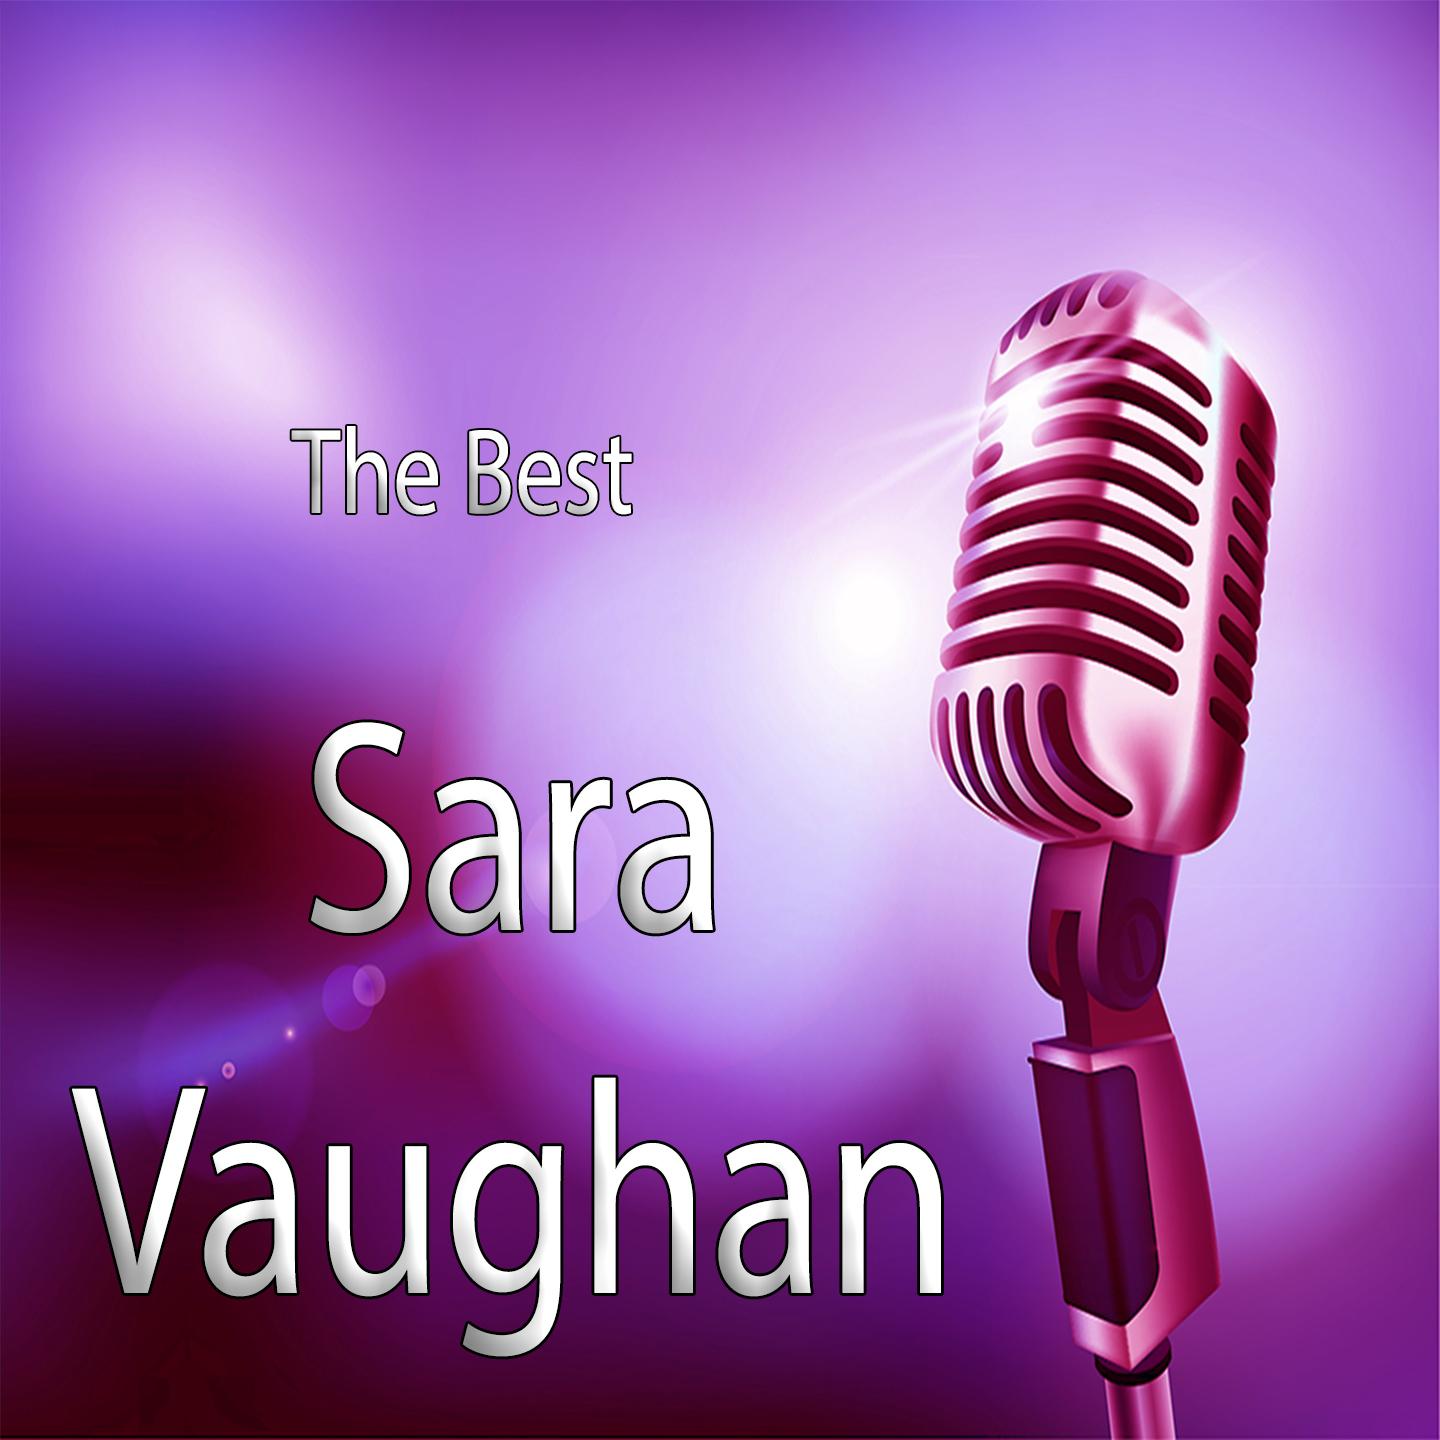 The Best of Sara Vaughan